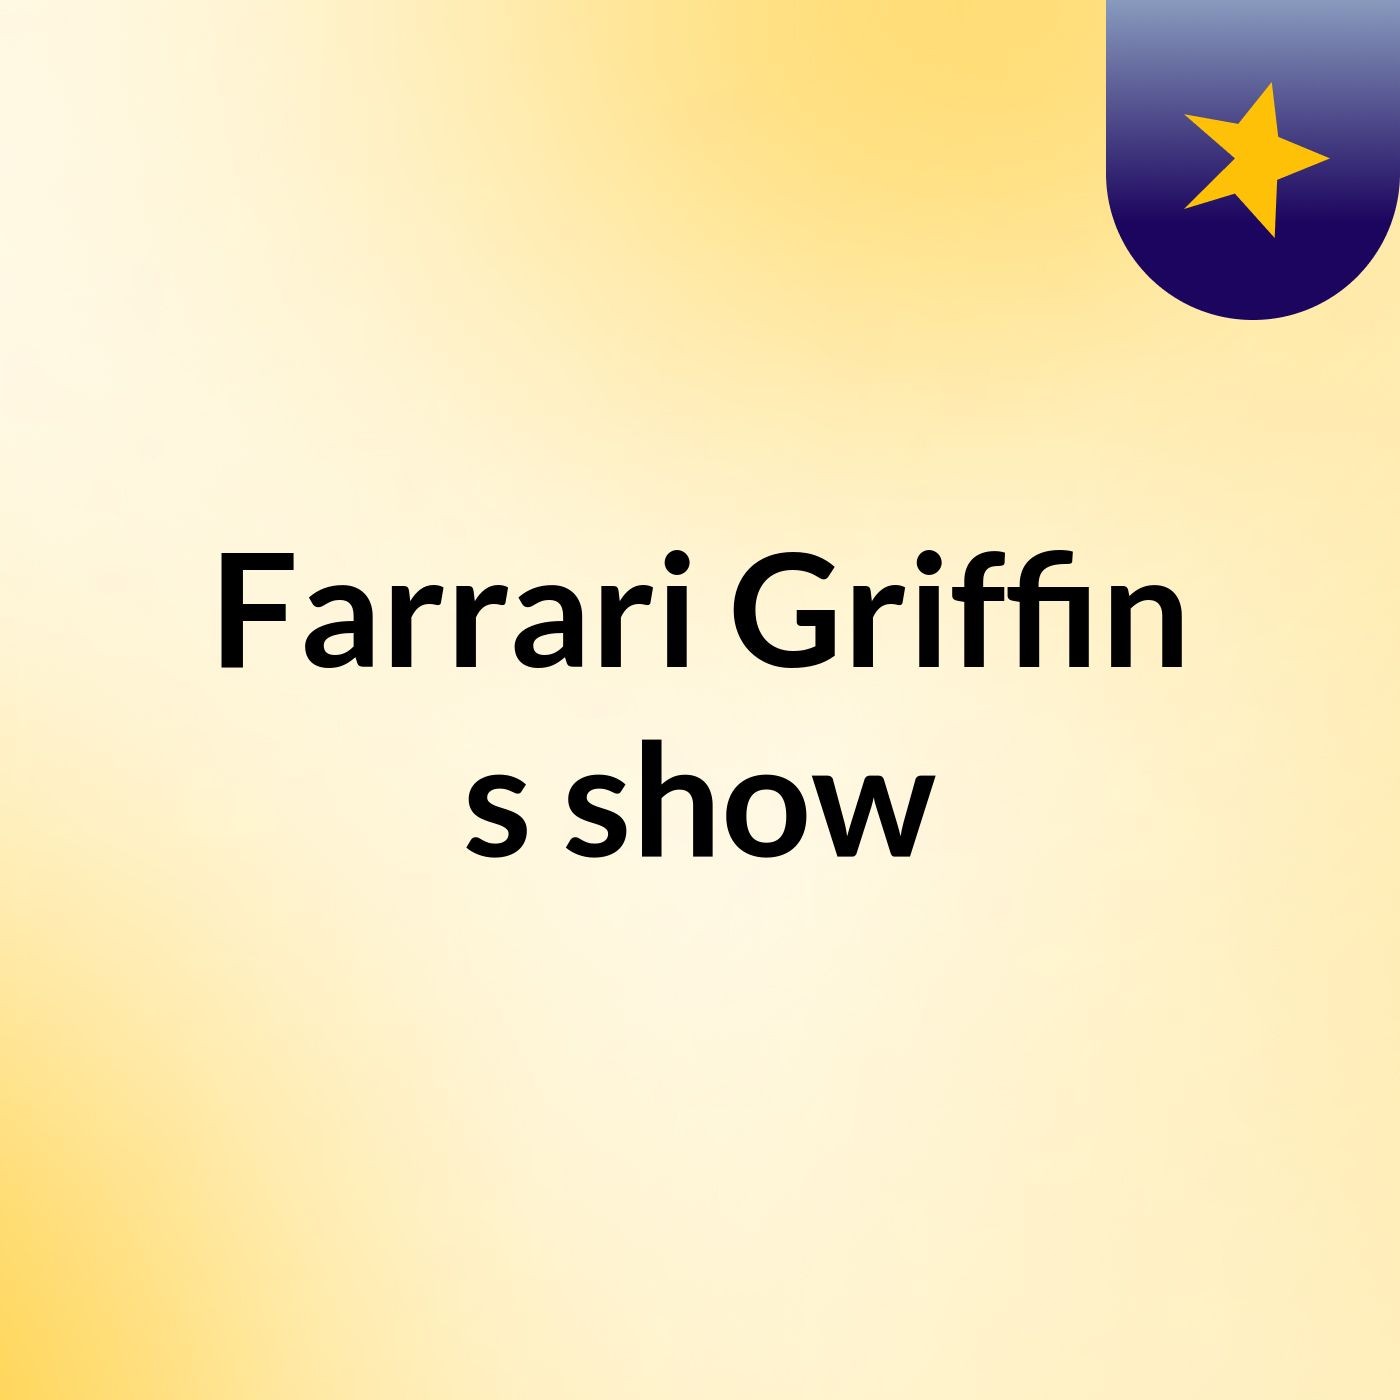 Farrari Griffin's show